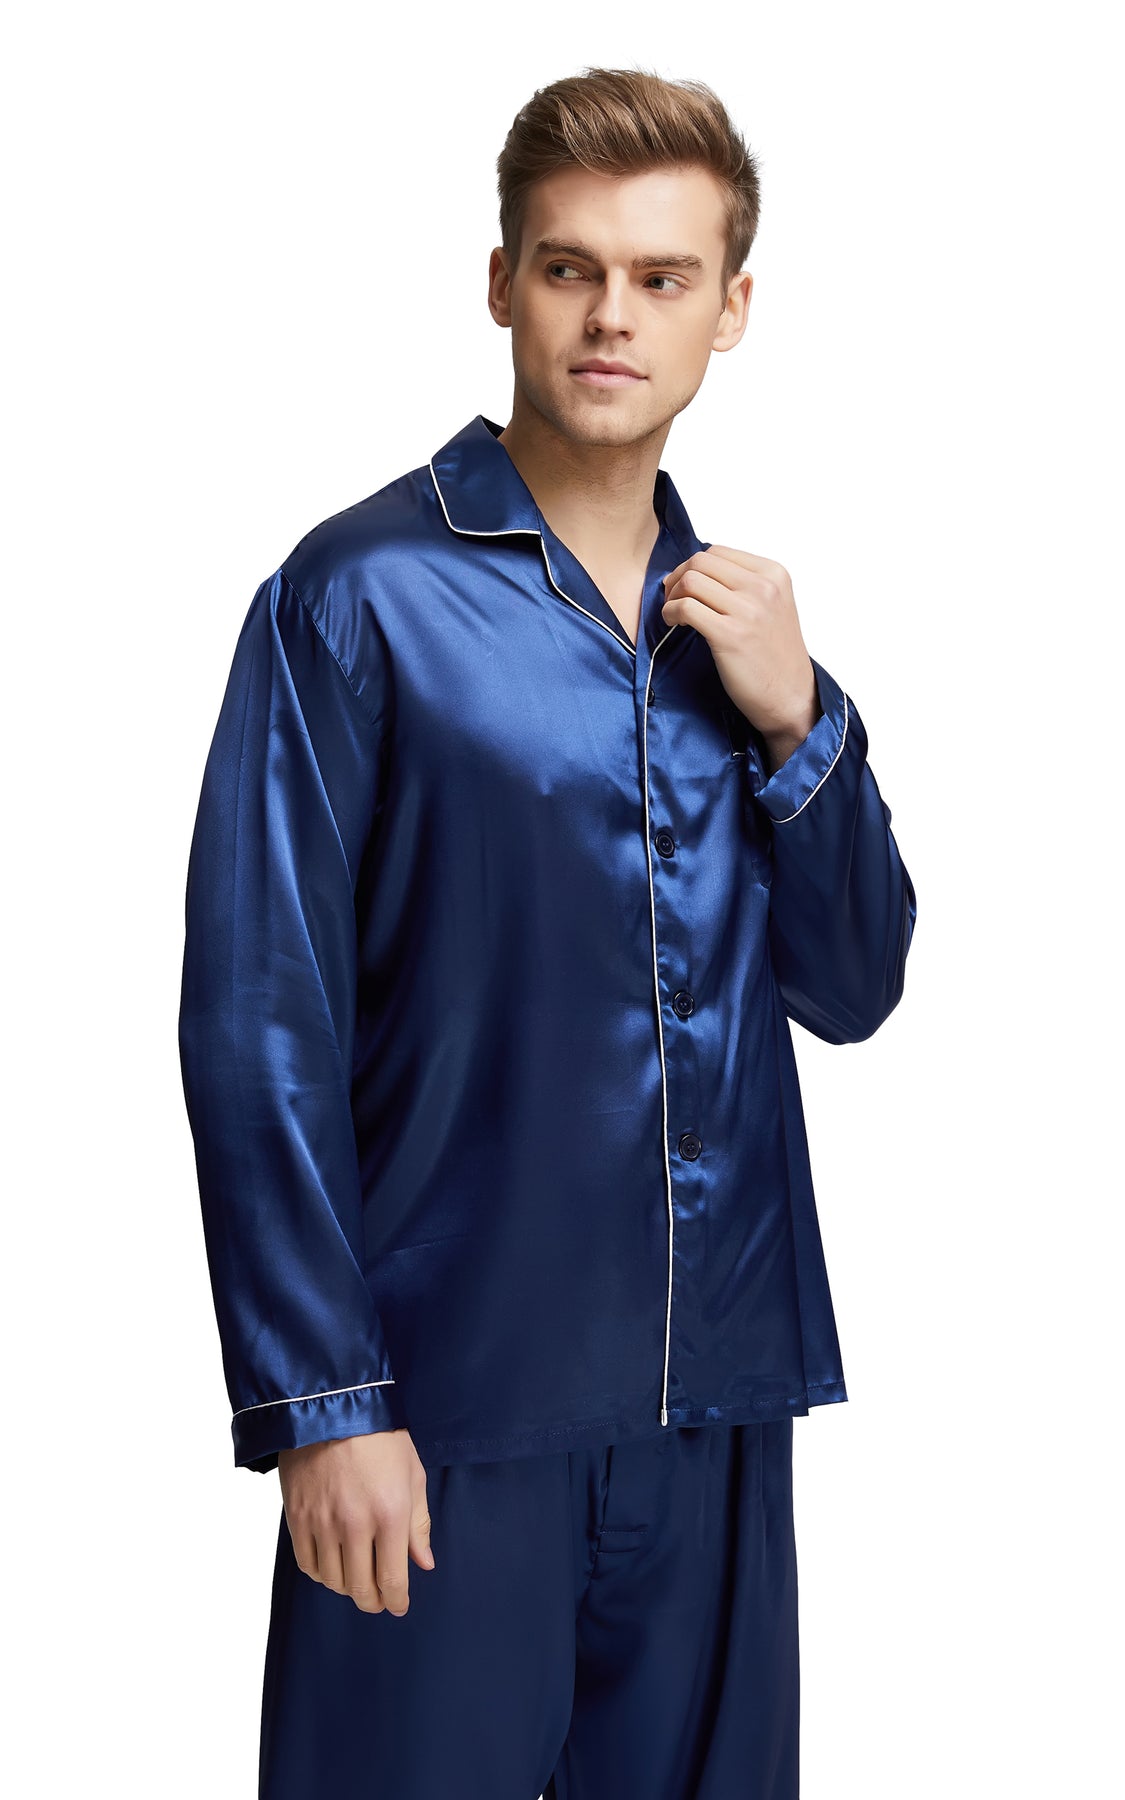 Mens Silk Satin Pajama Set Long Sleeve Navy Blue With White Piping Tony And Candice 